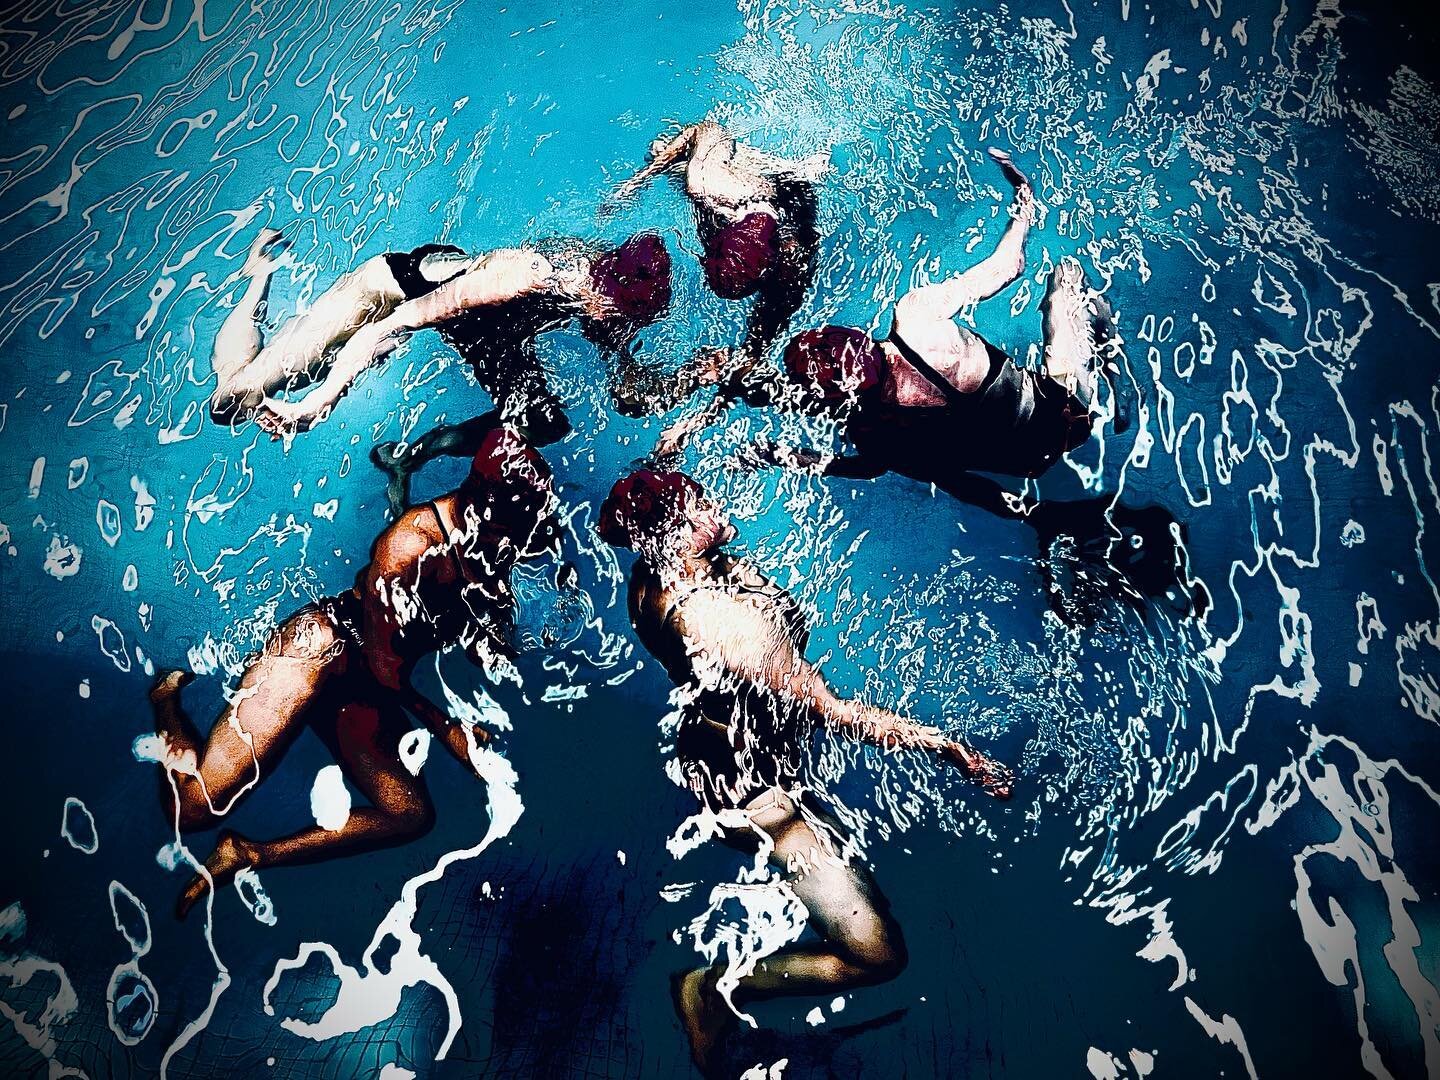 Artistic swimming, art vs sport. Let&rsquo;s vote!! 
Taken by #paolatirados 
&bull;
&bull;
&bull;
#imaginesynchro #synchro #synchronizedswimming #artisticswimming #usaartisticswimming #usasynchro #nyc #imagineswimming #ThelmagineNation #art #sport